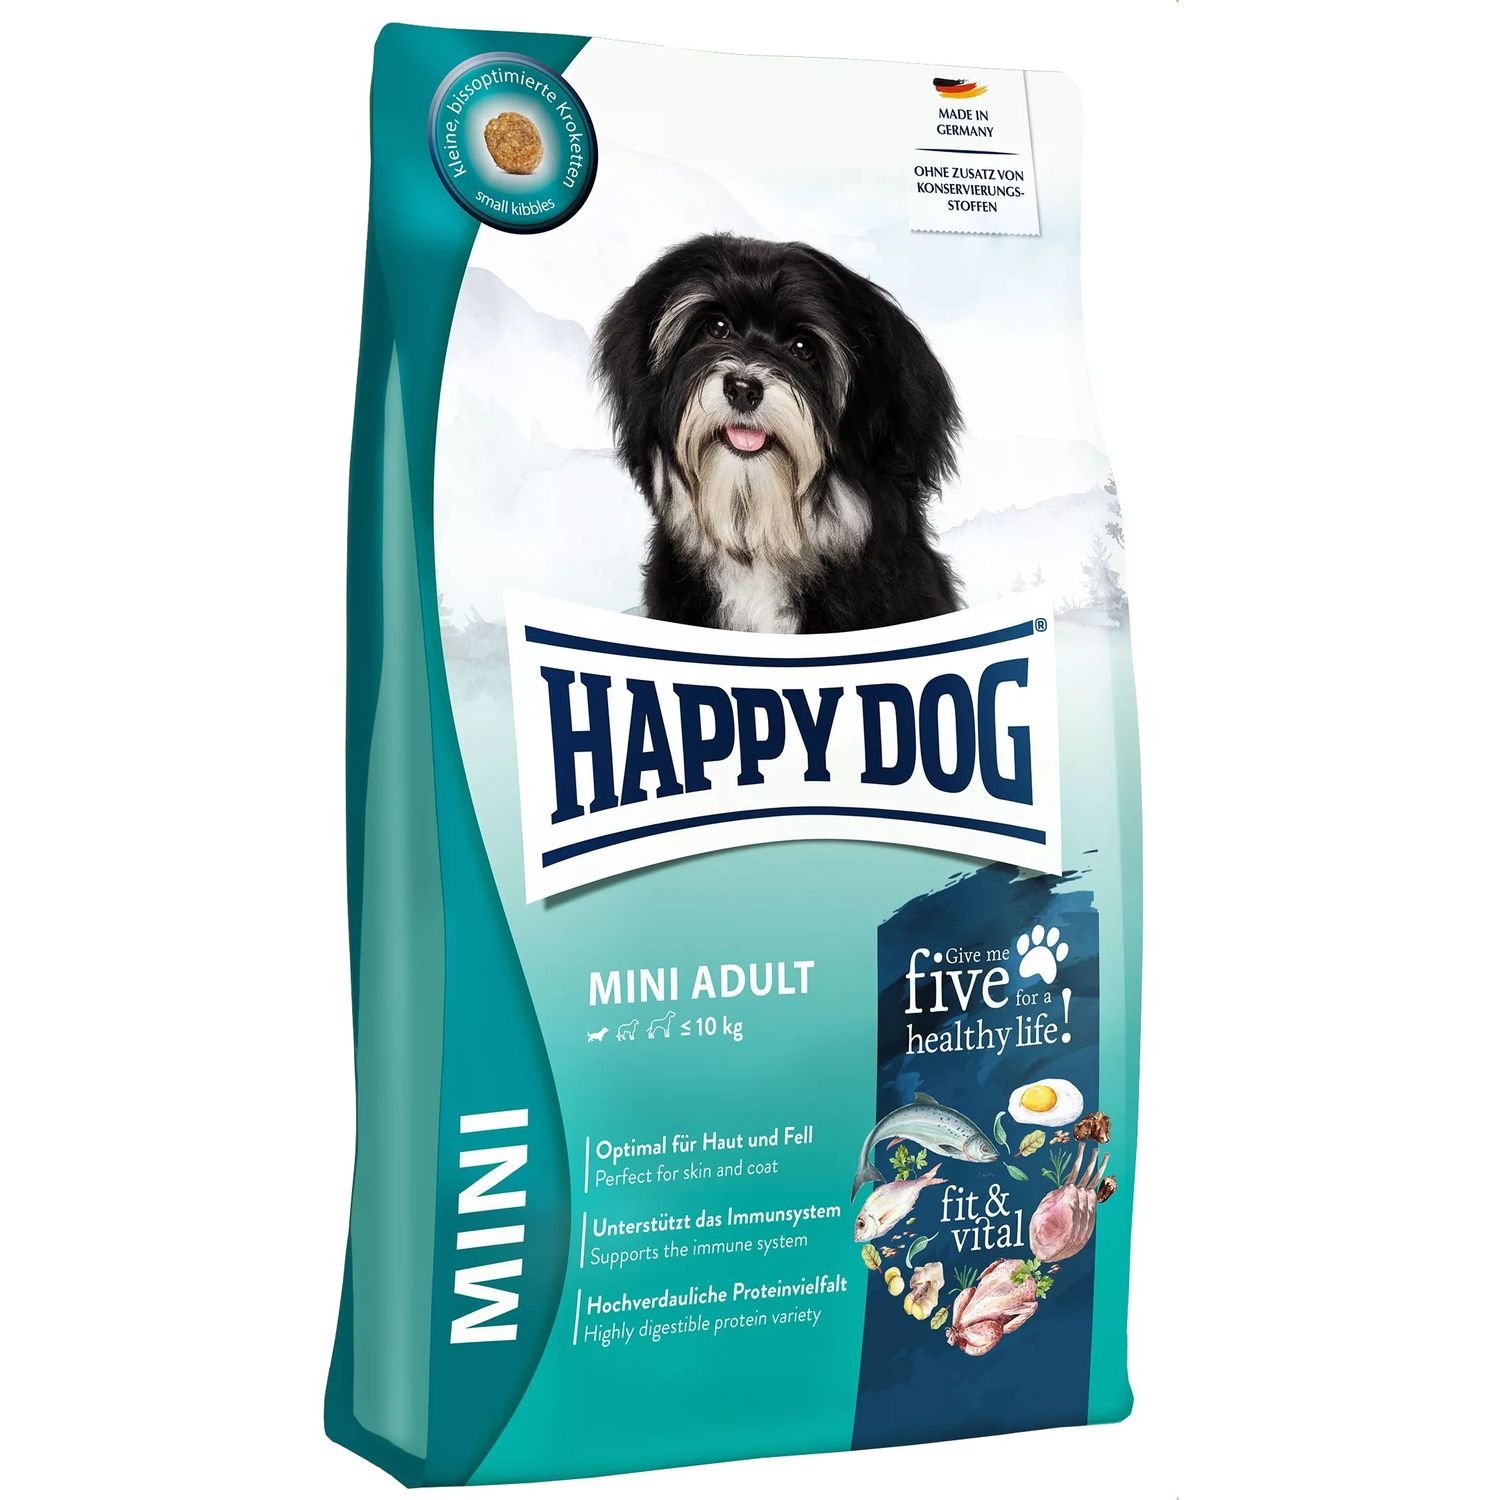 Сухой корм для собак Happy Dog HD fit & vital Adult, 4 кг - фото 1